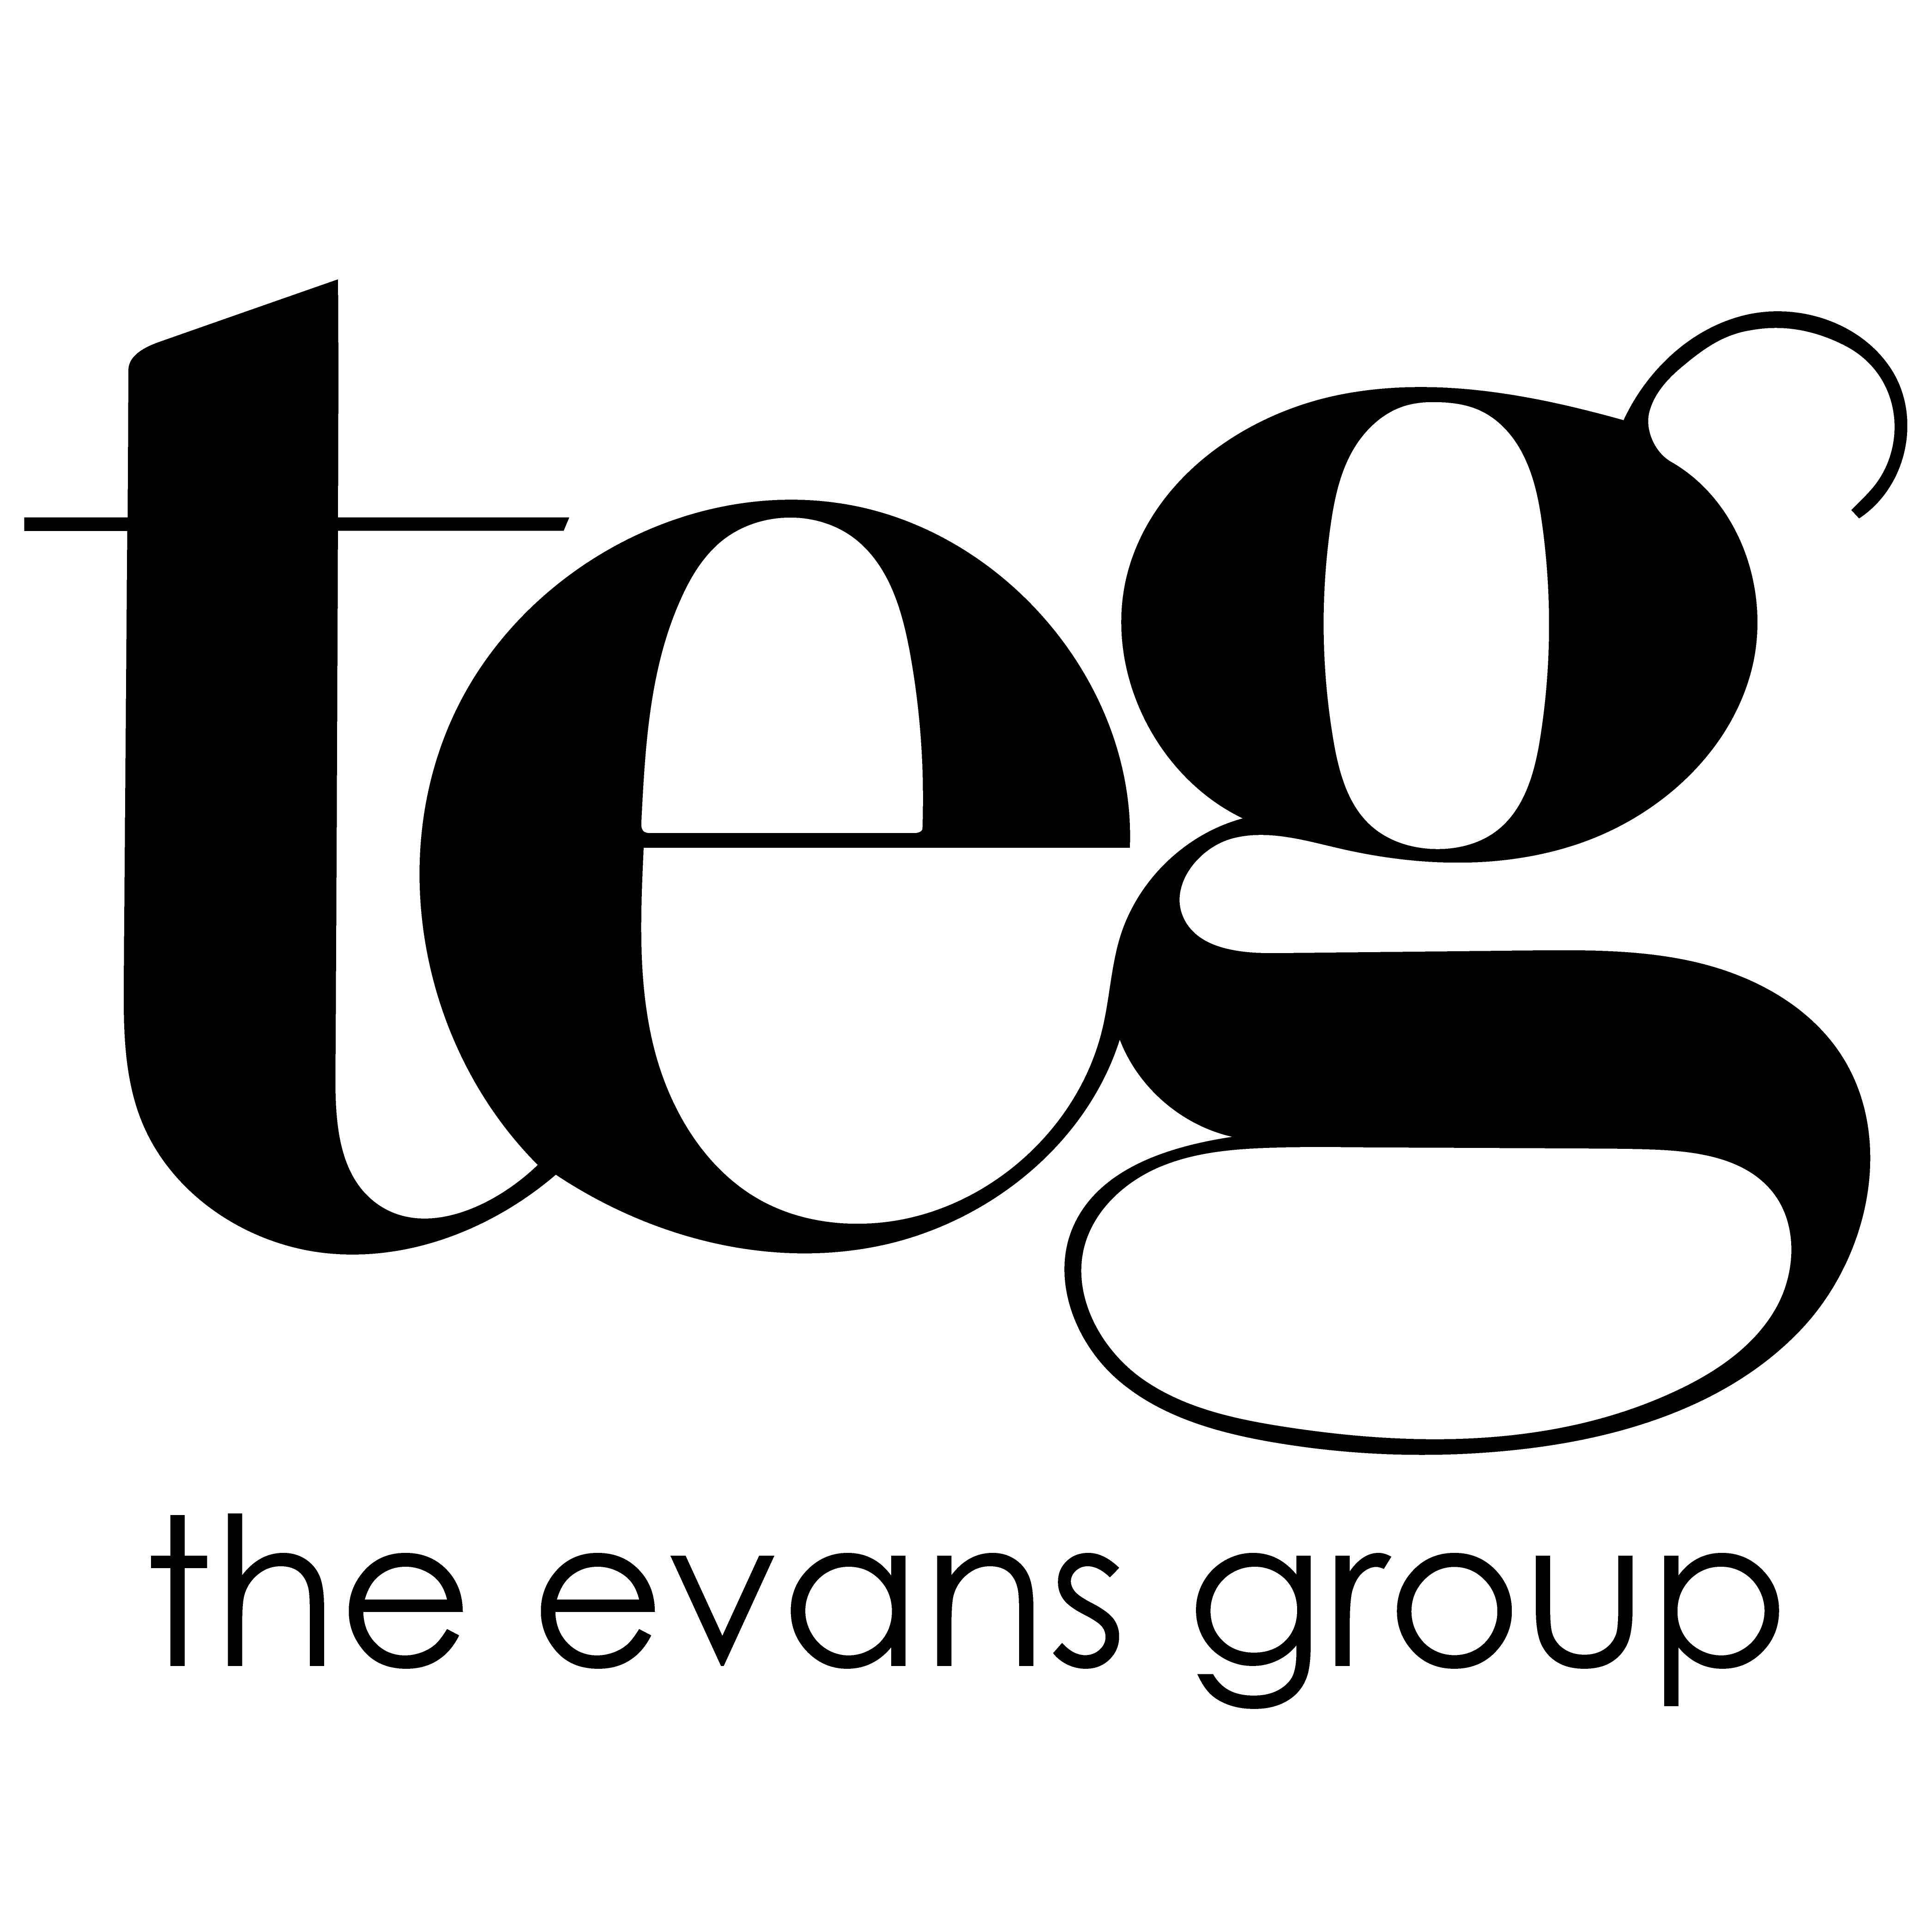 The Evans Group (Teg) logo